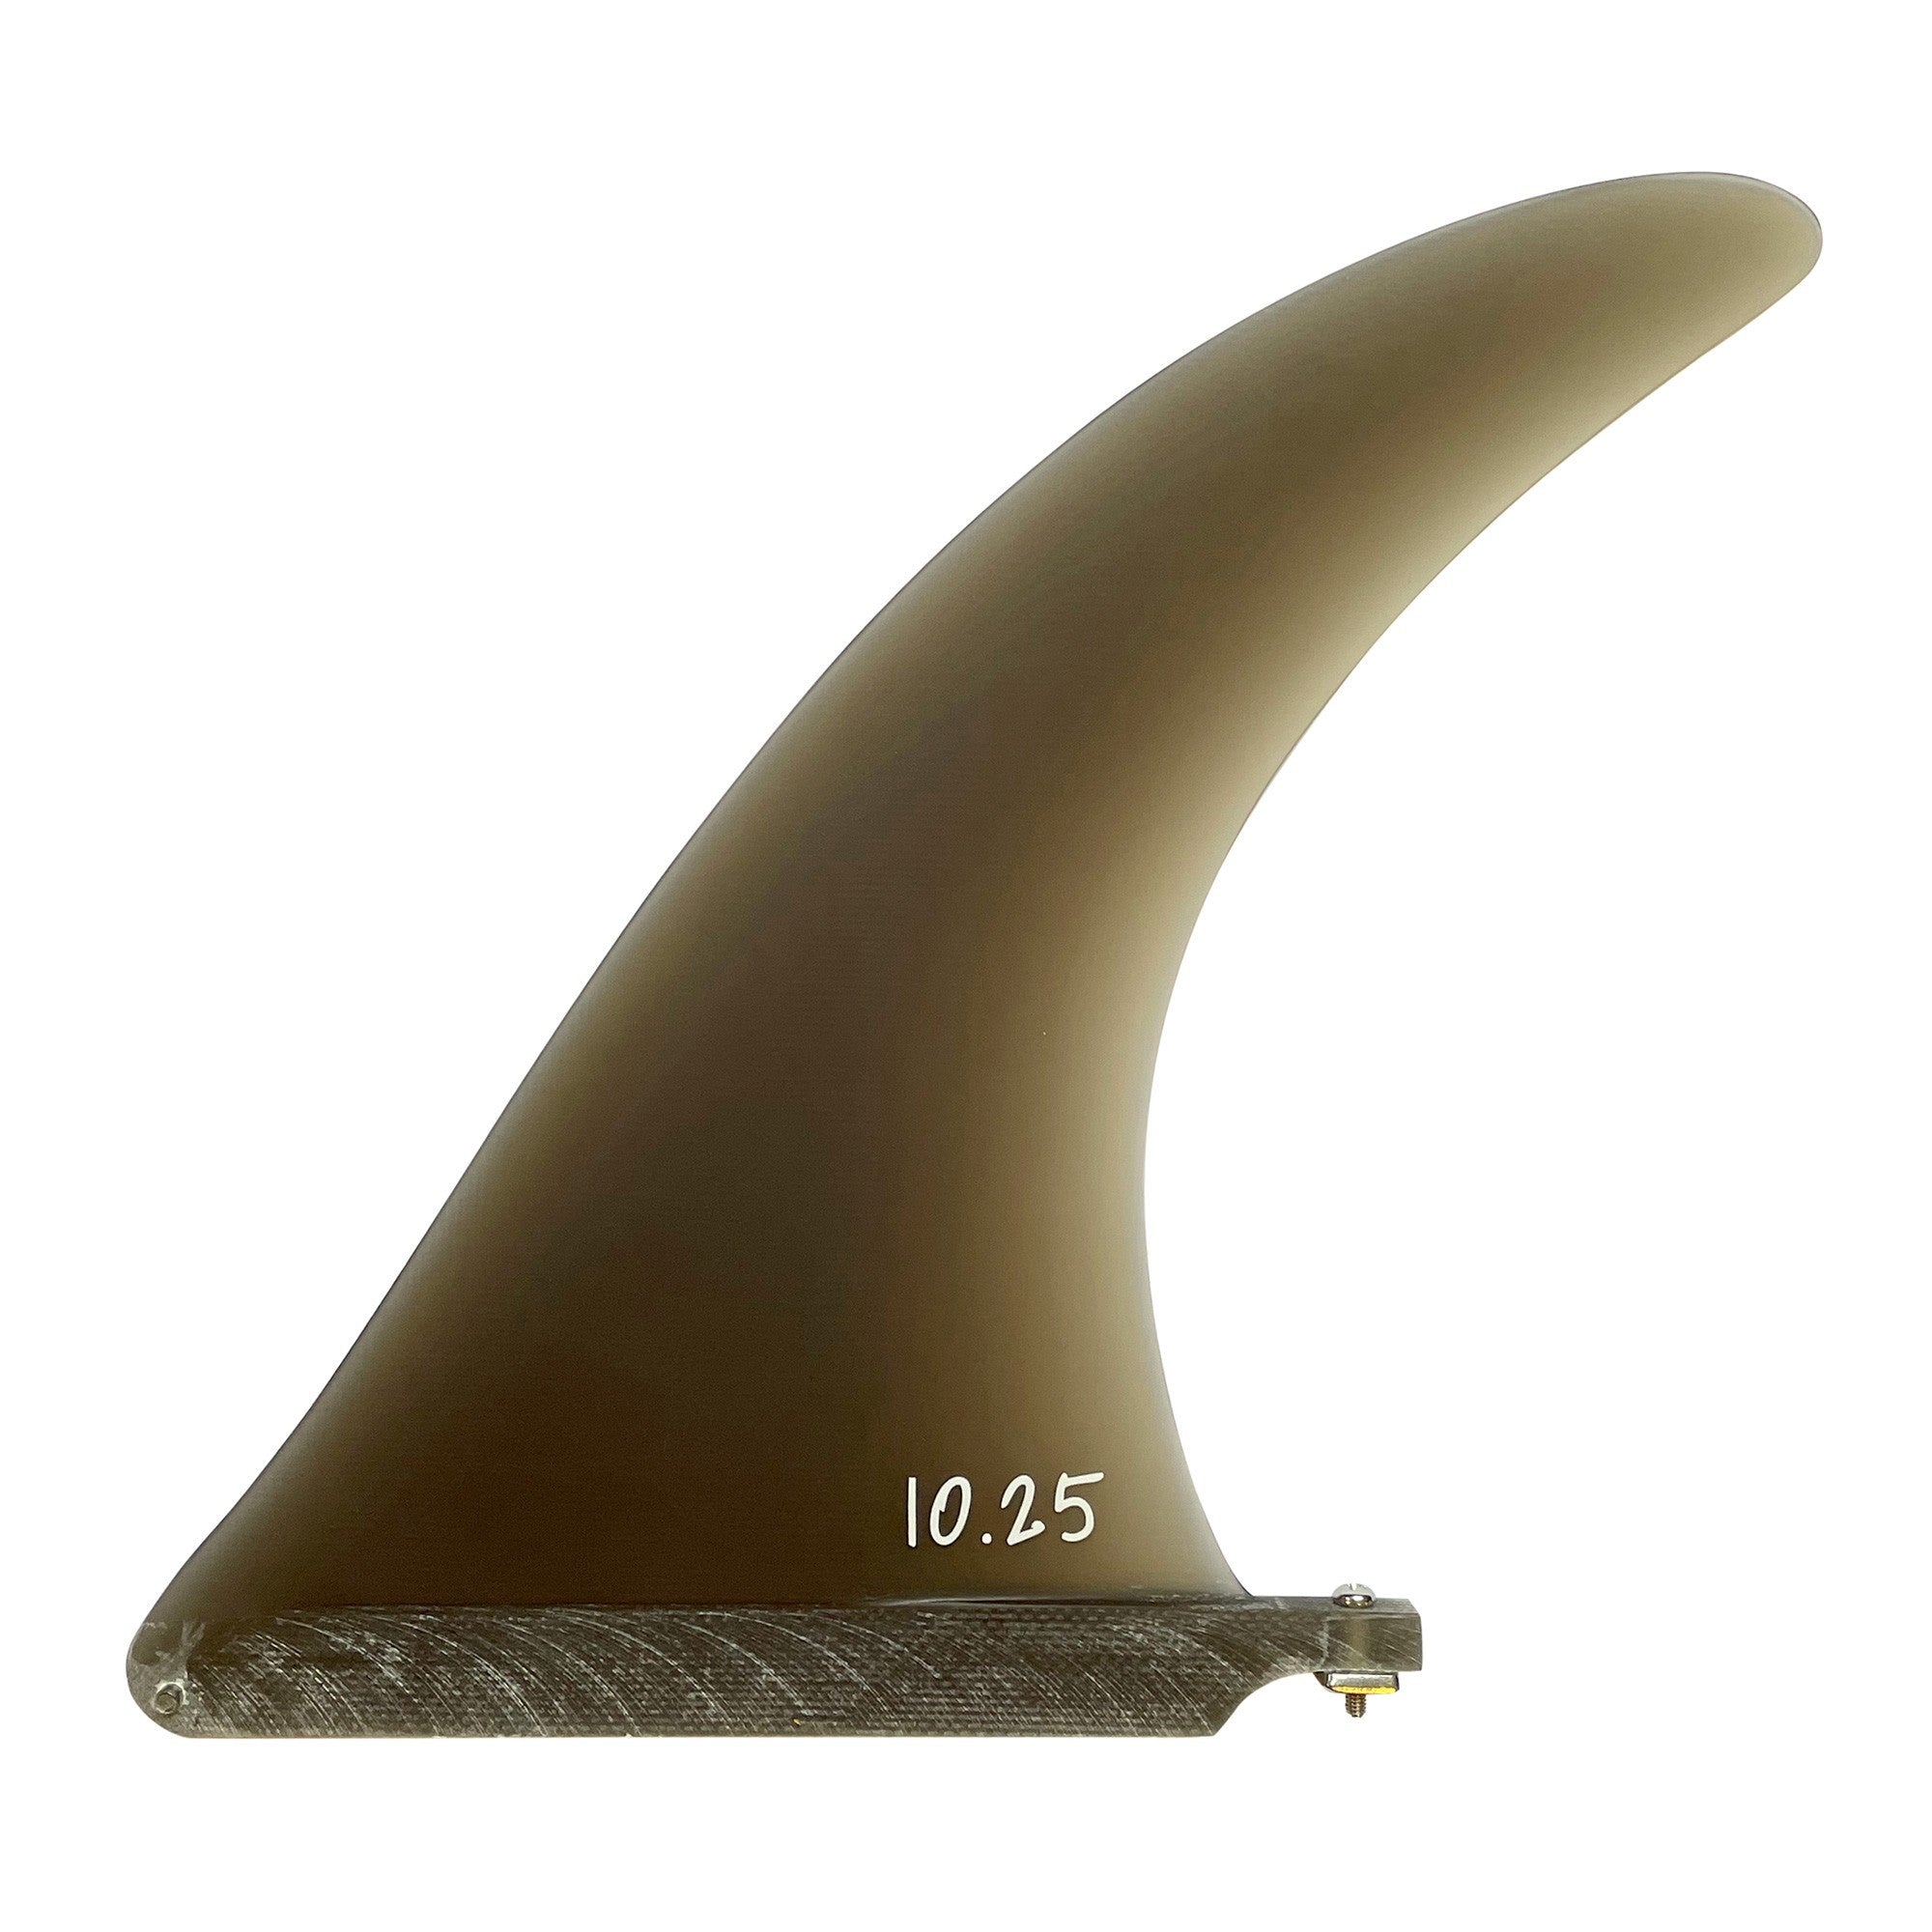 SURF SYSTEM - Dolphin Fiberglass Single Fin (Us Box) - 8.5" - Smoke